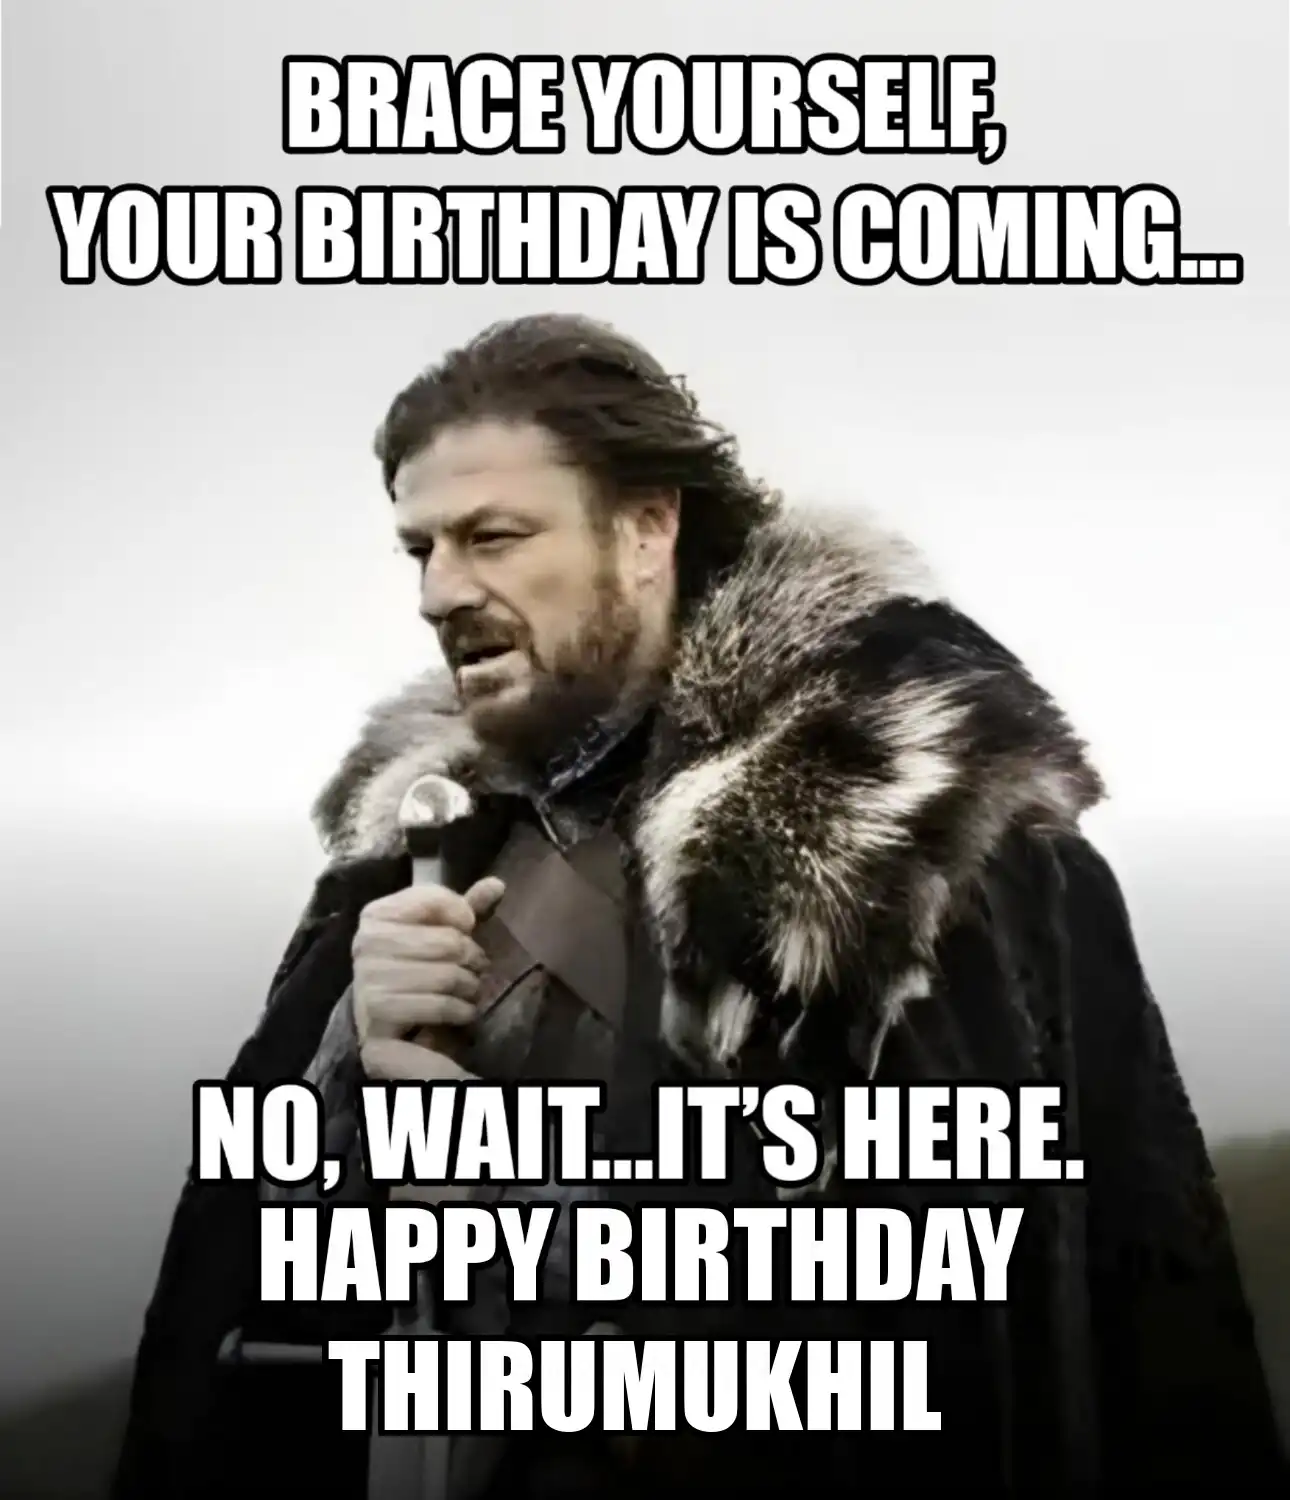 Happy Birthday Thirumukhil Brace Yourself Your Birthday Is Coming Meme